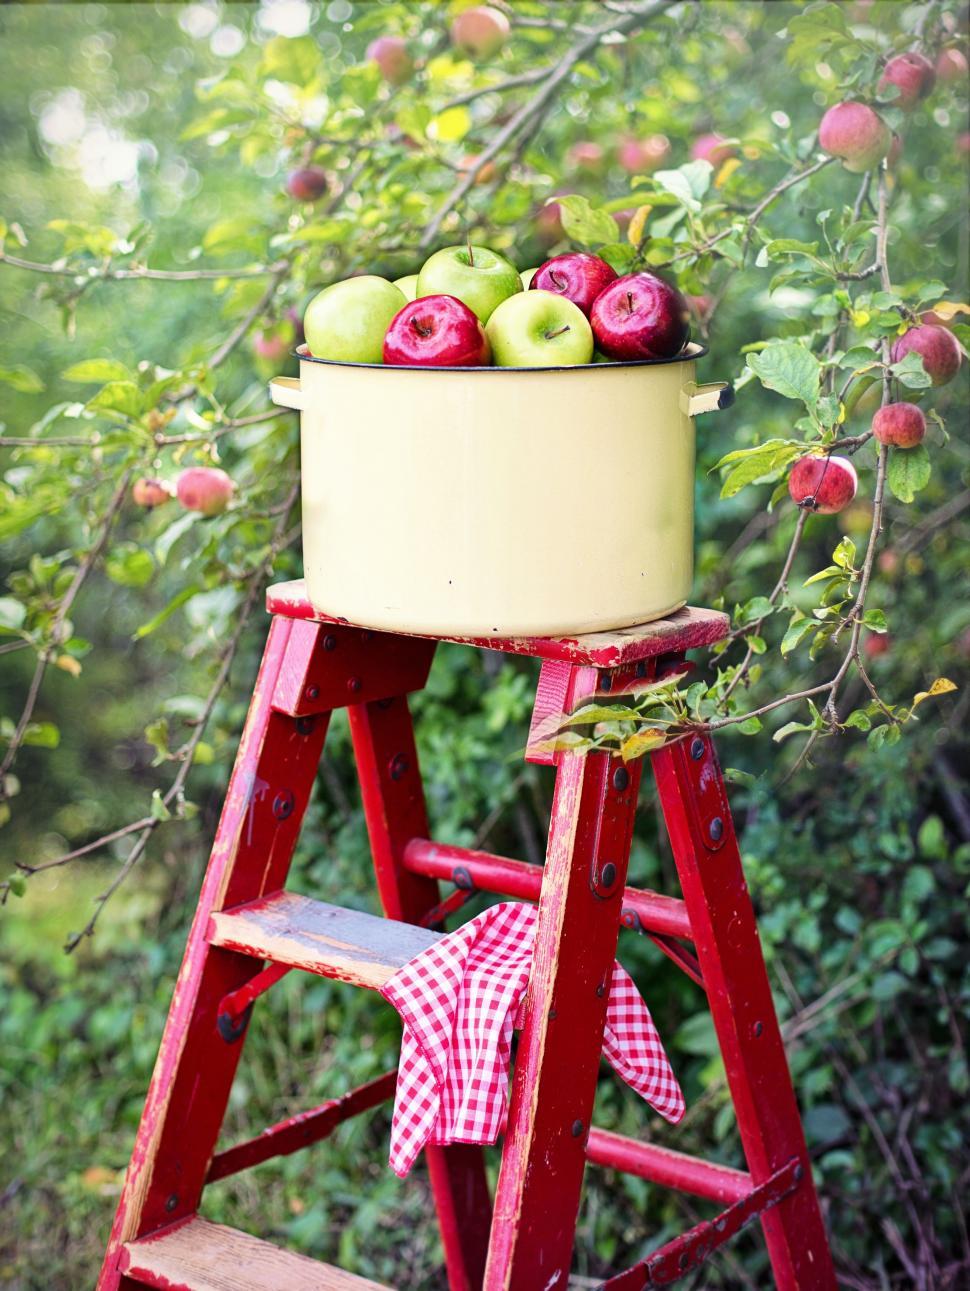 Free Image of Bucket of Apples  